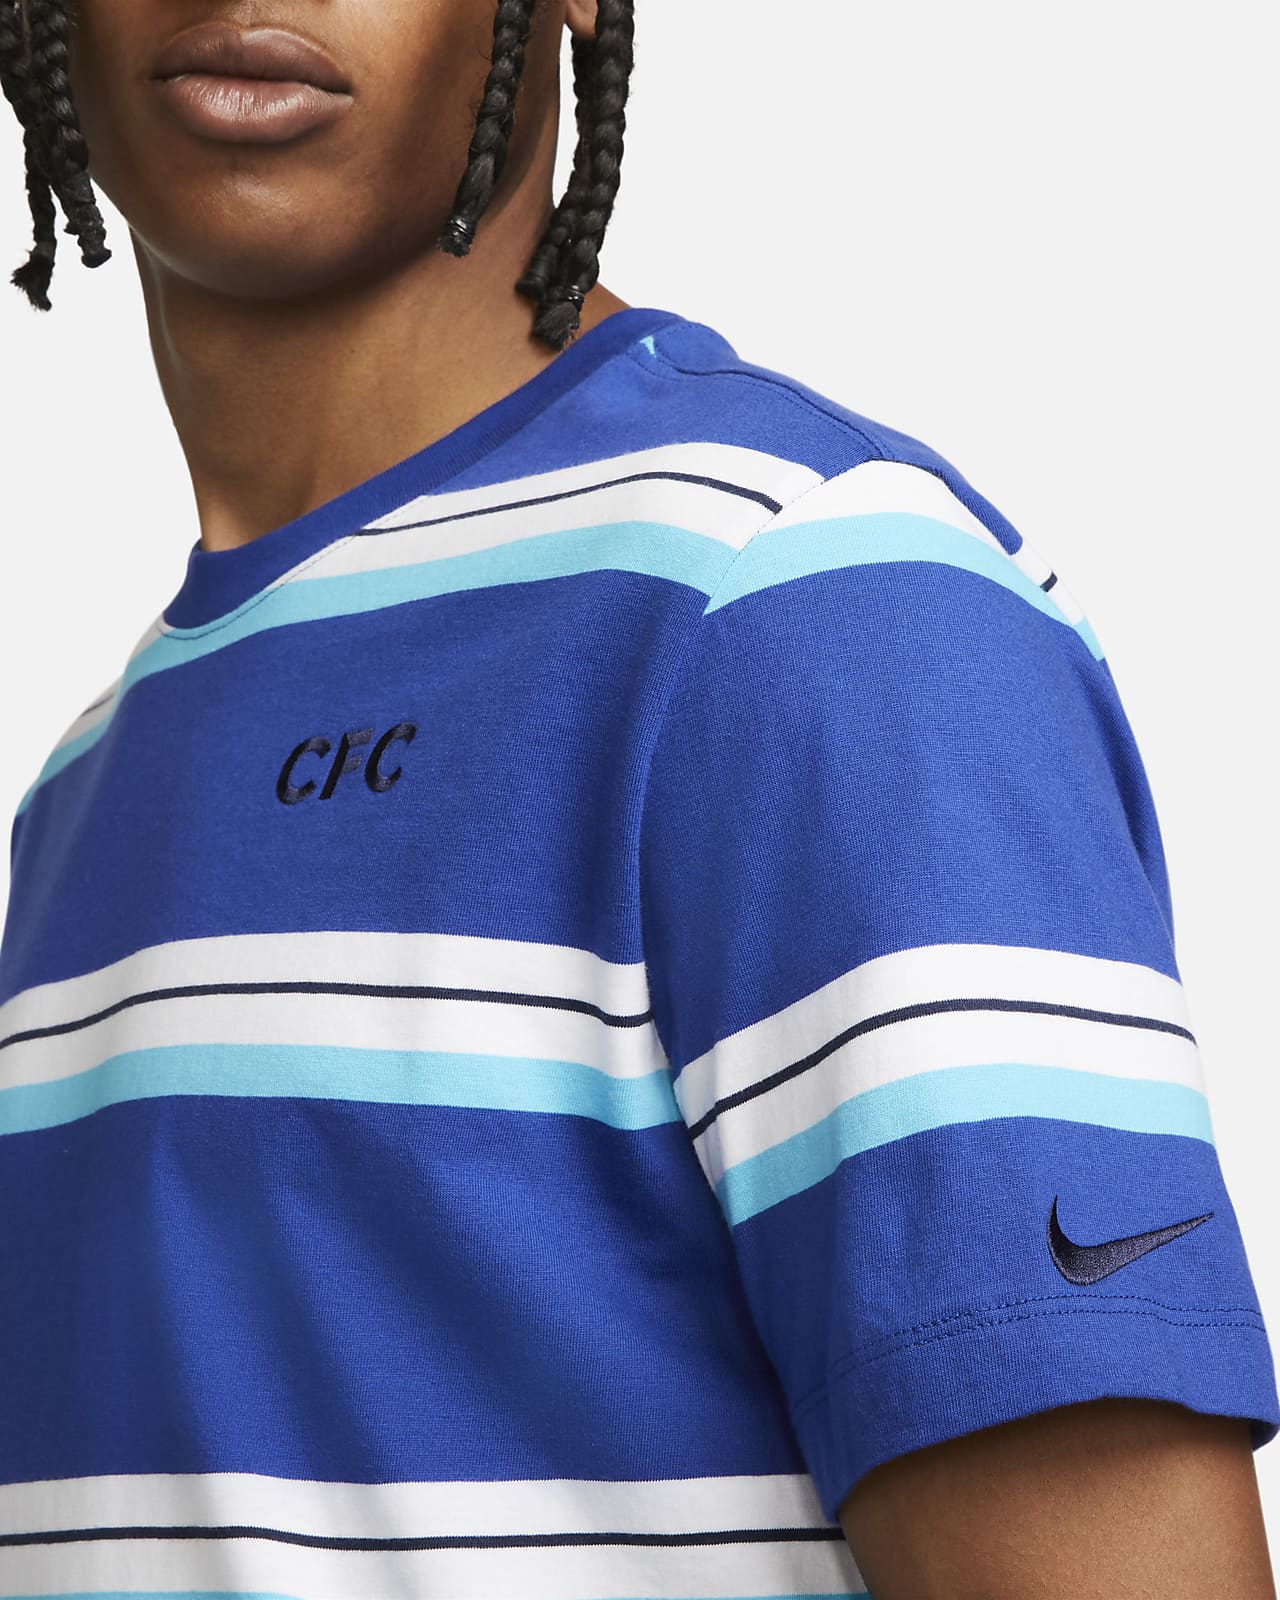 T-shirt Nike Chelsea FC pour homme. Nike FR